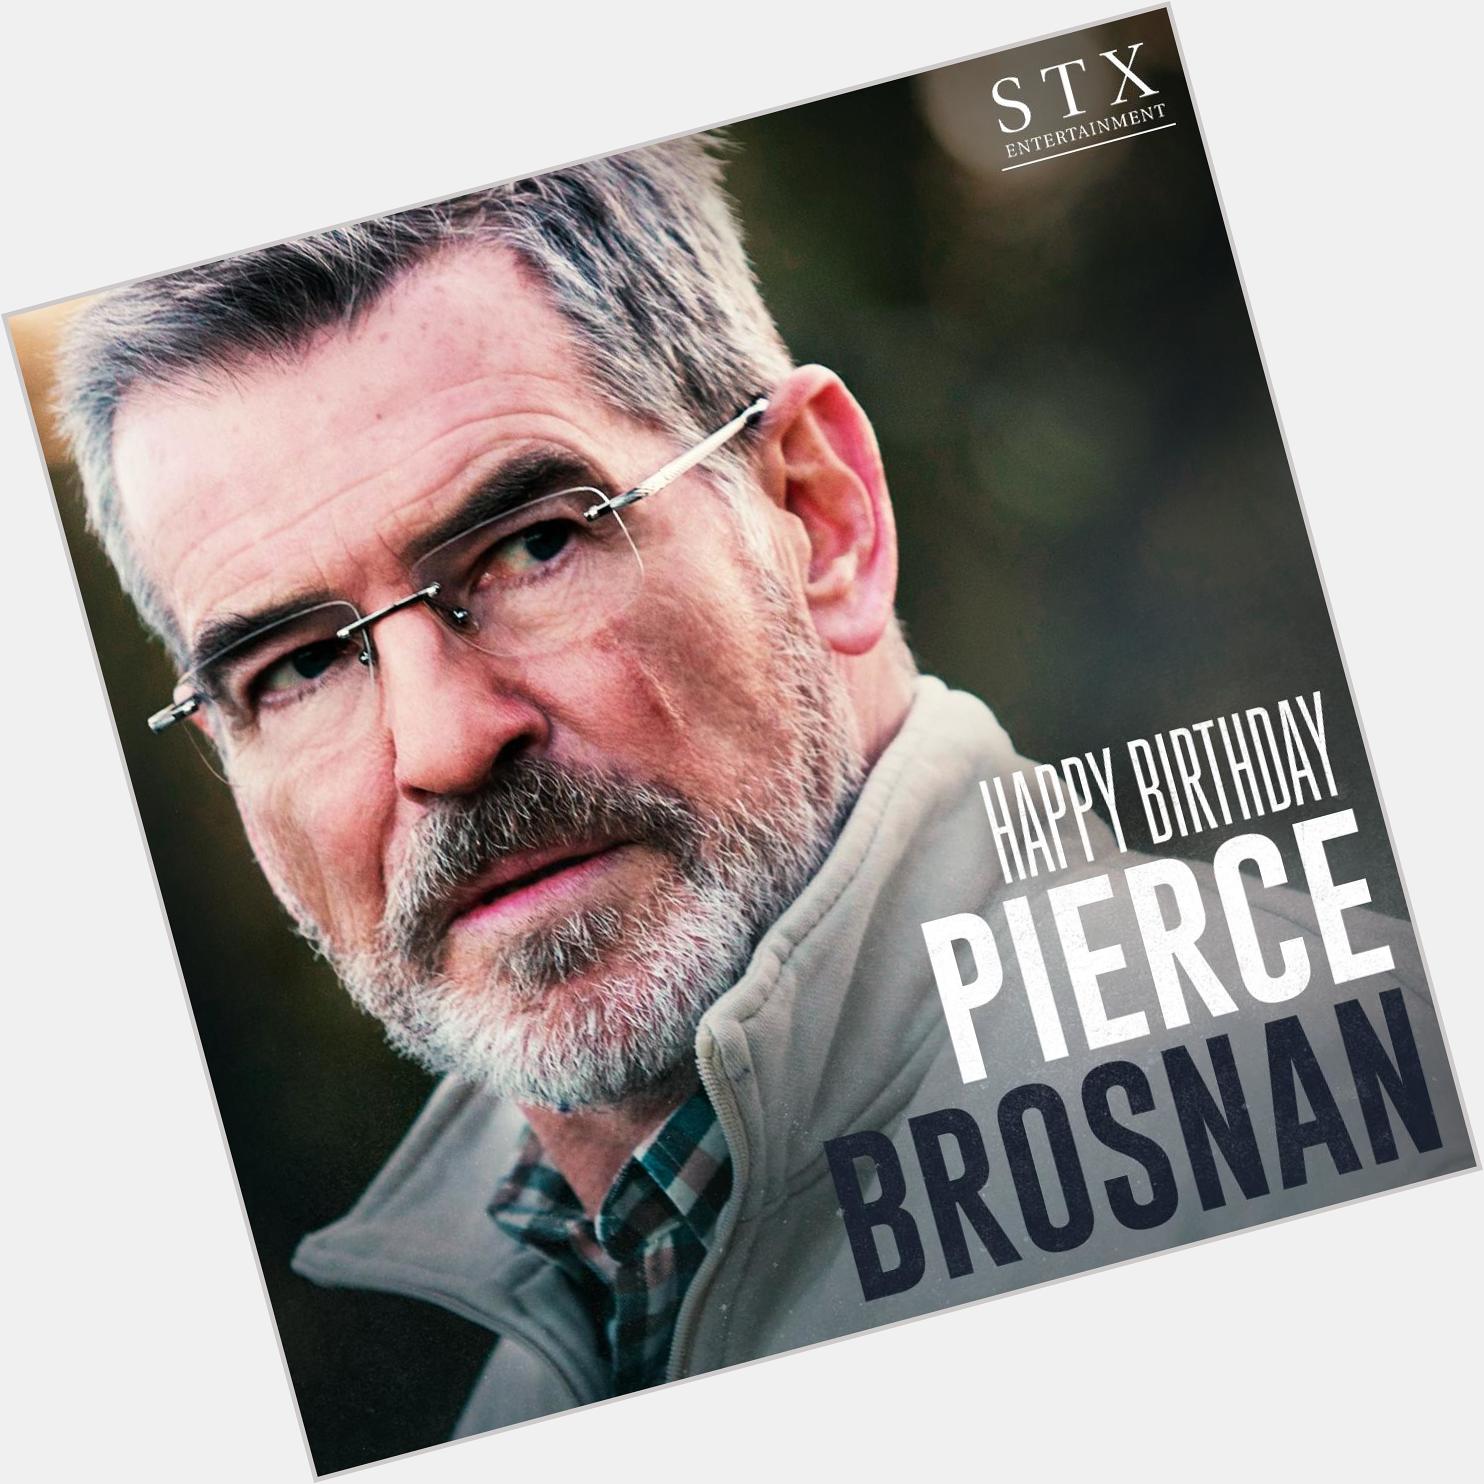 Happy birthday to the talented Pierce Brosnan! 